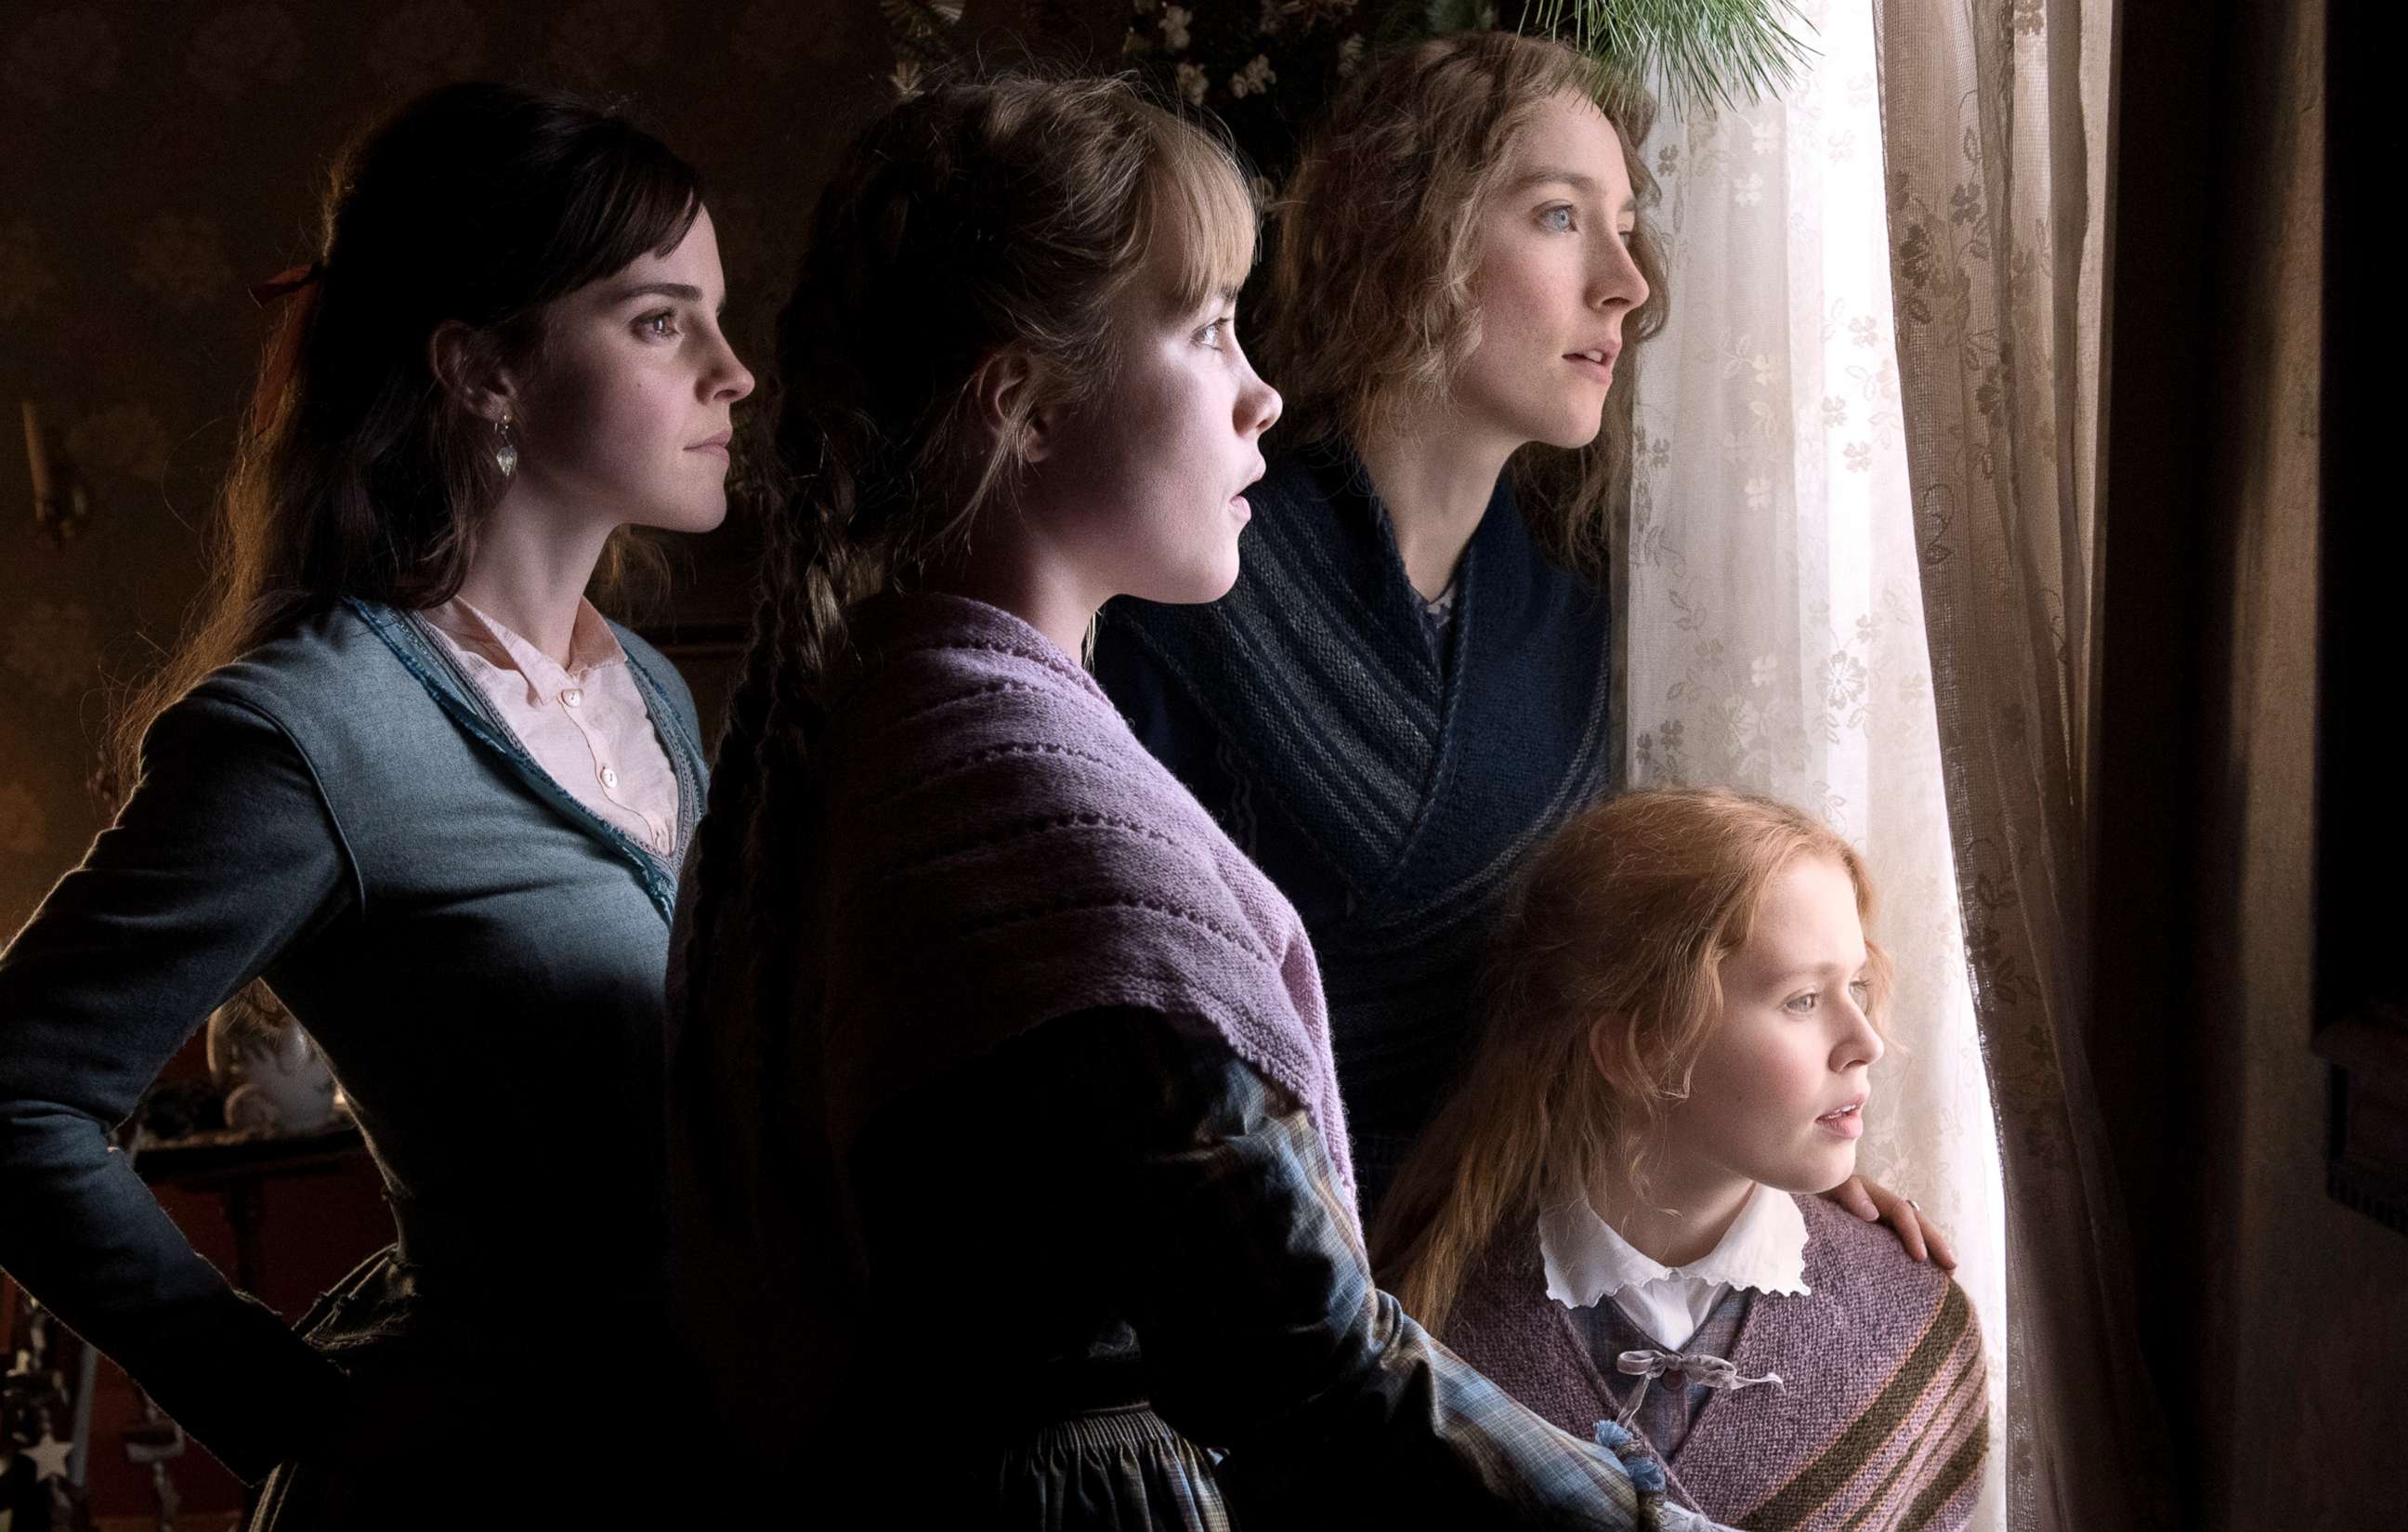 PHOTO: A scene from the 2019 movie, "Little Women," starring Emma Watson, Saoirse Ronan, Eliza Scanlen and Florence Pugh.